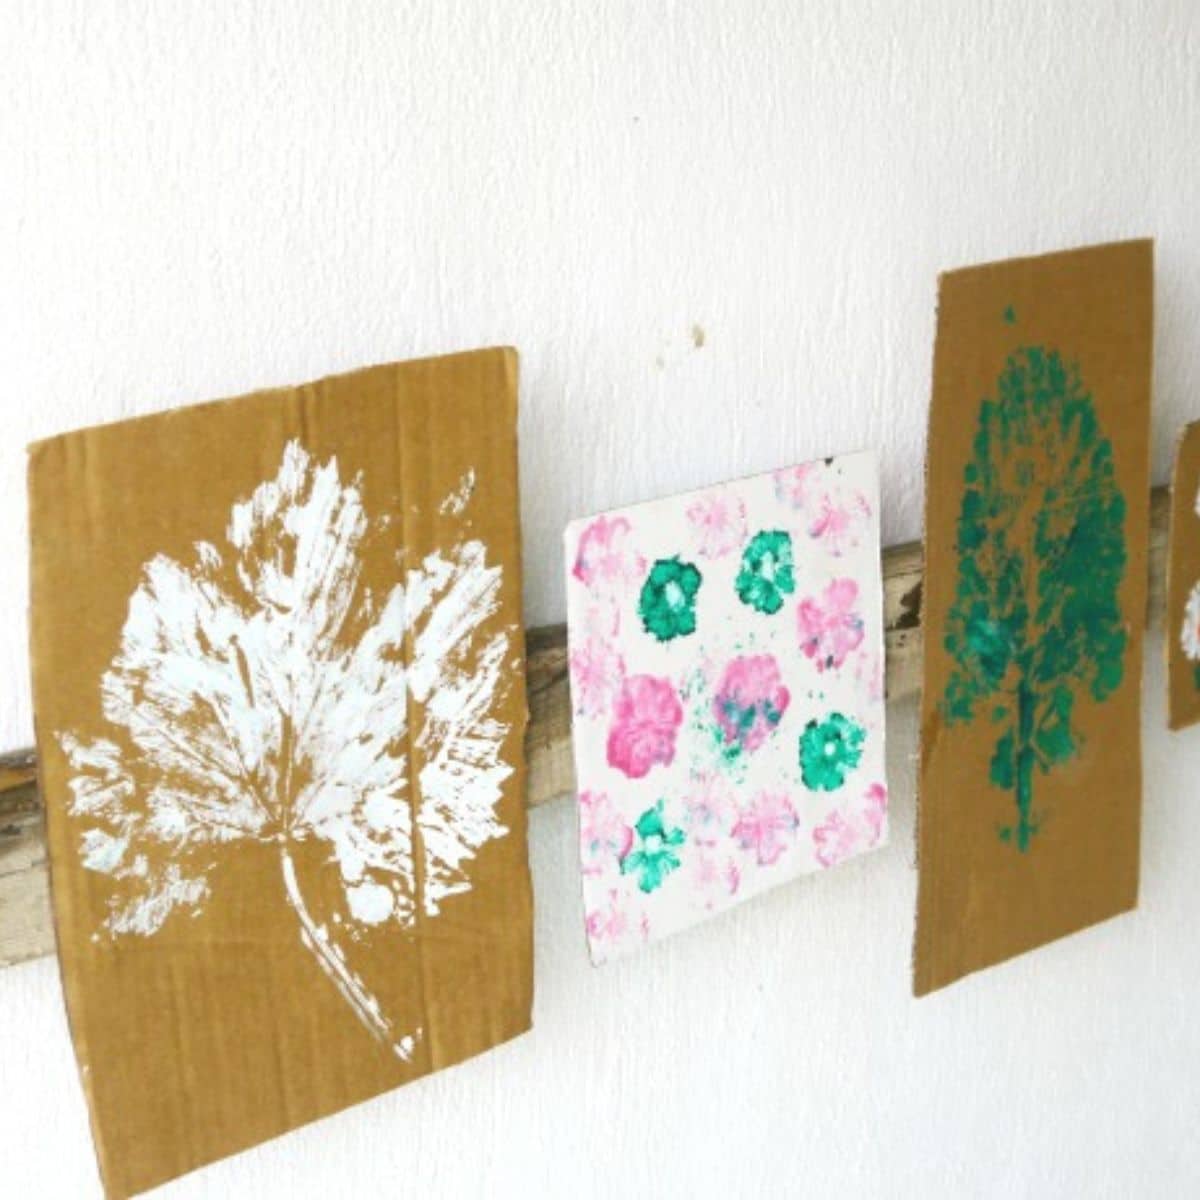 DIY cardboard nature wall craft for kids.